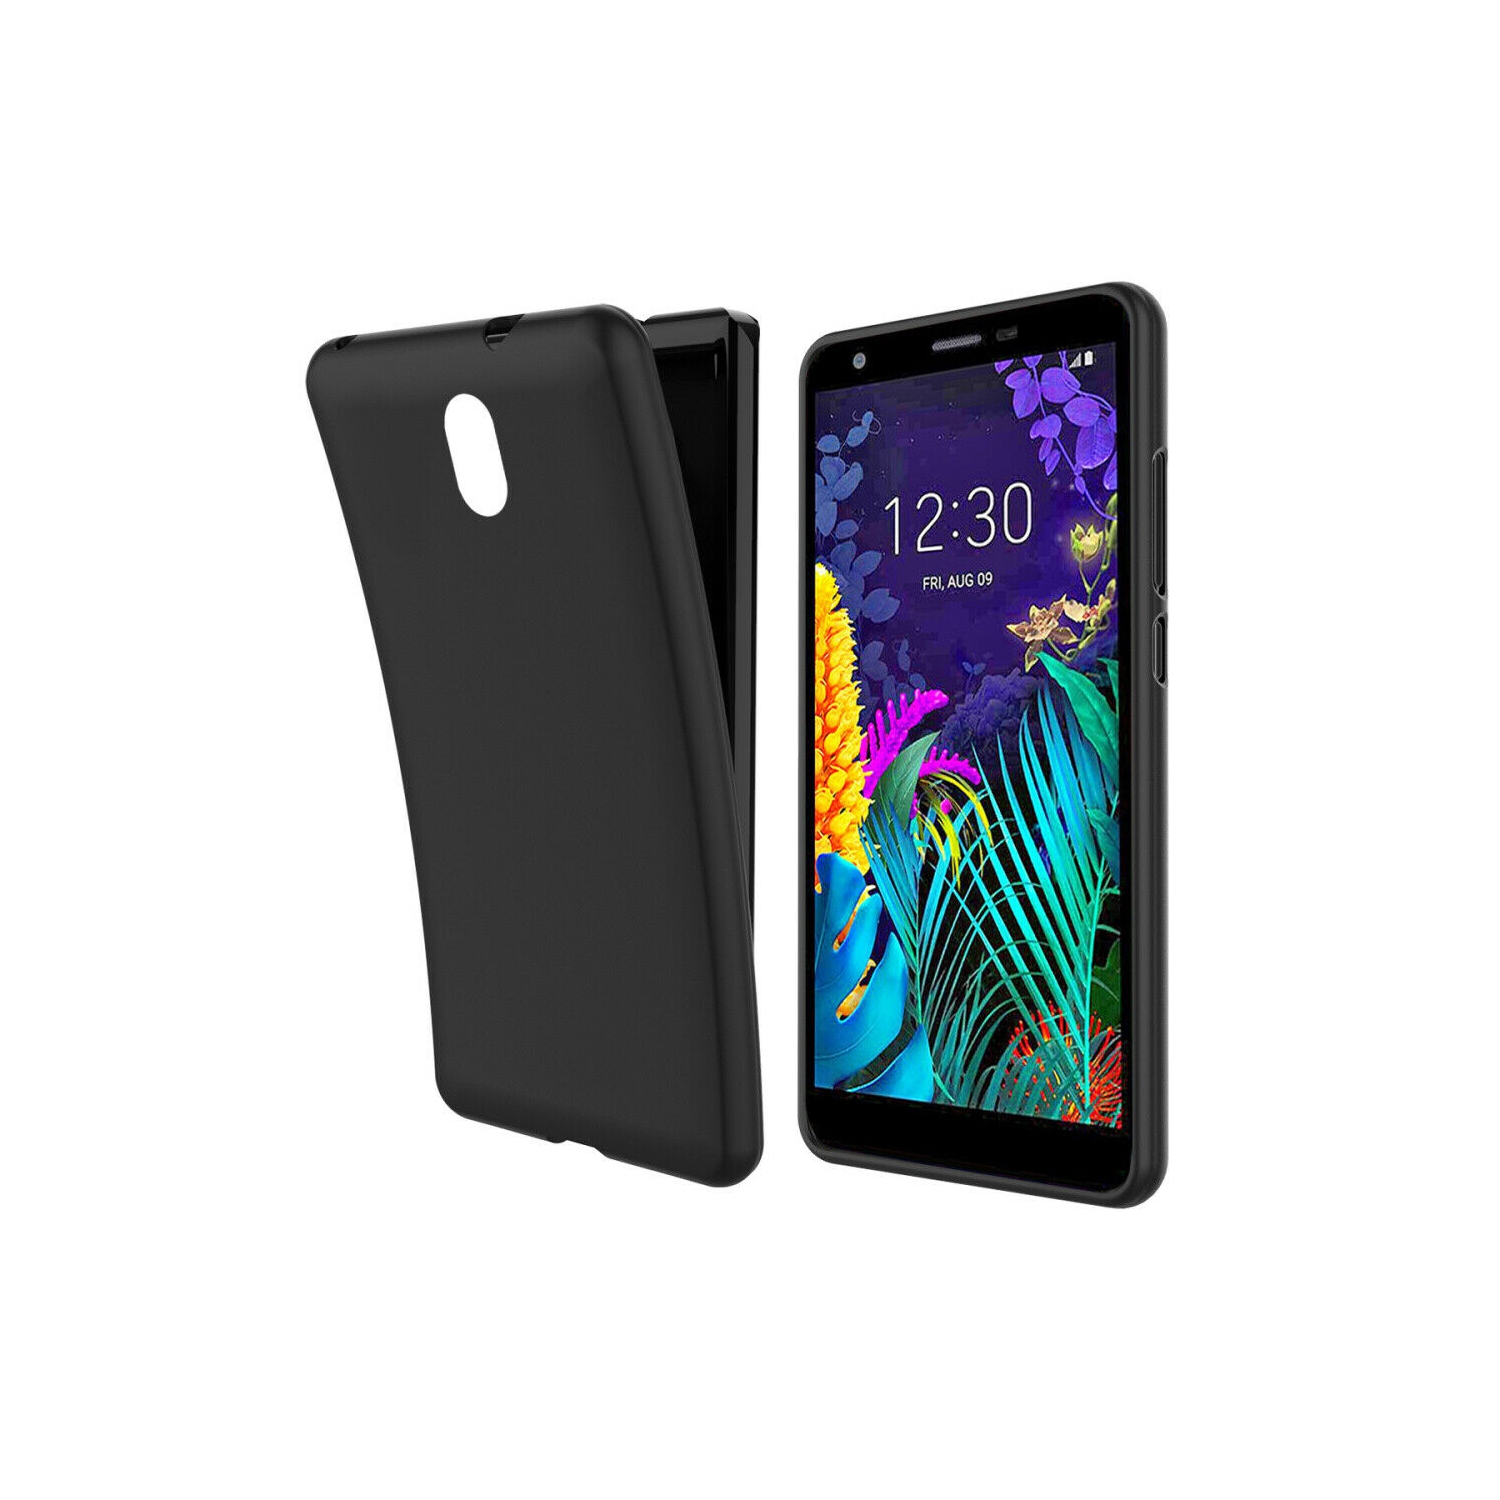 LG K30 2019 - Slim Sleek Soft Silicone Phone Case [Pro-Mobile]